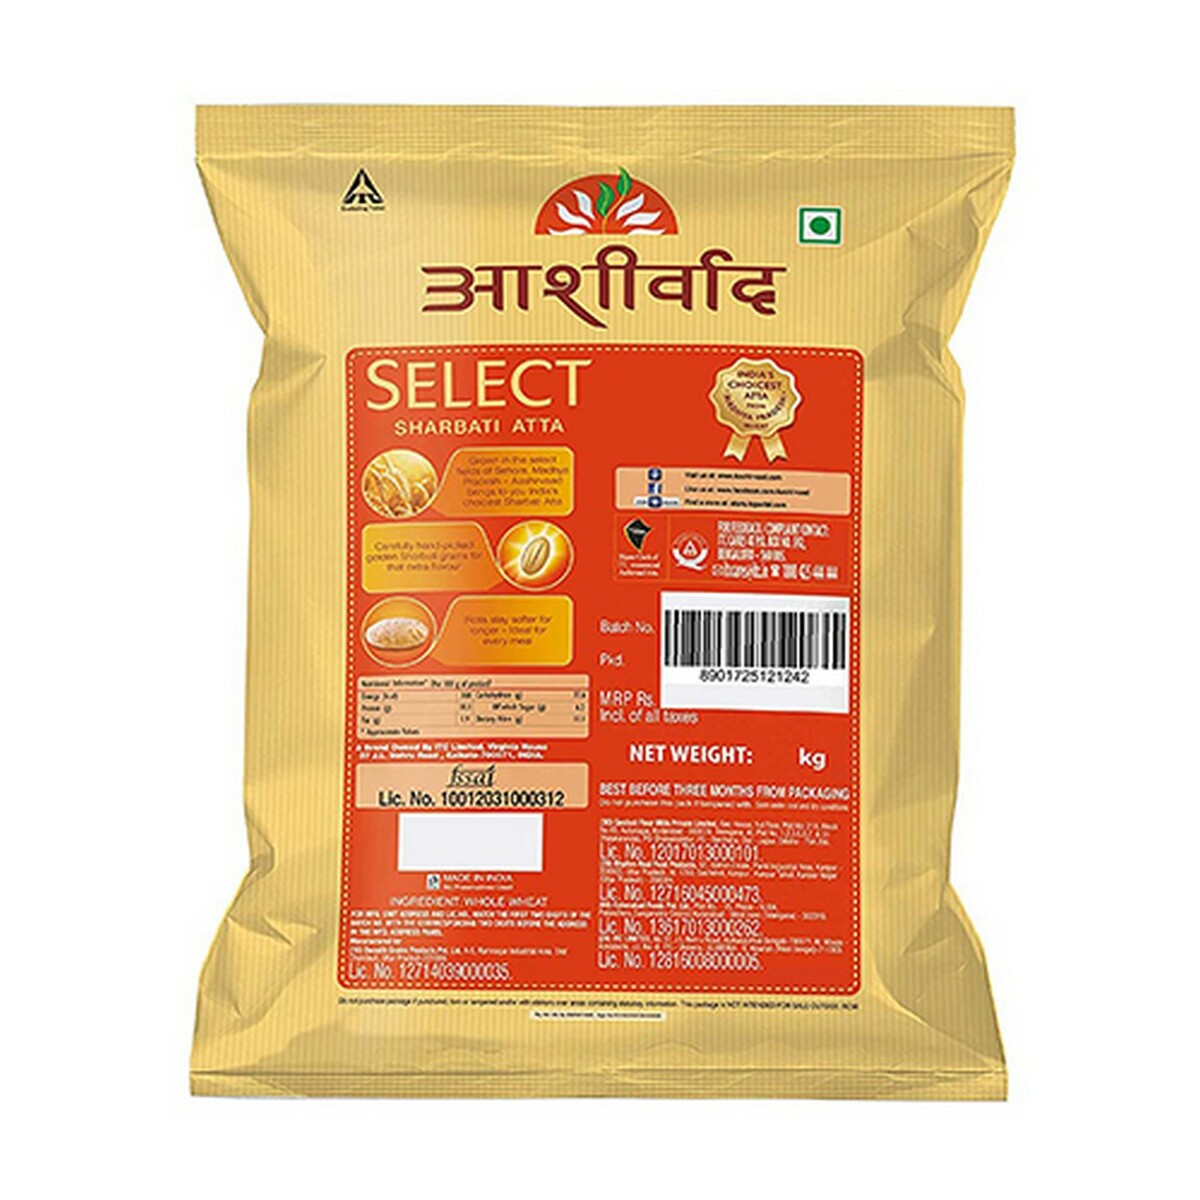 Aashirvaad Select Atta 1kg